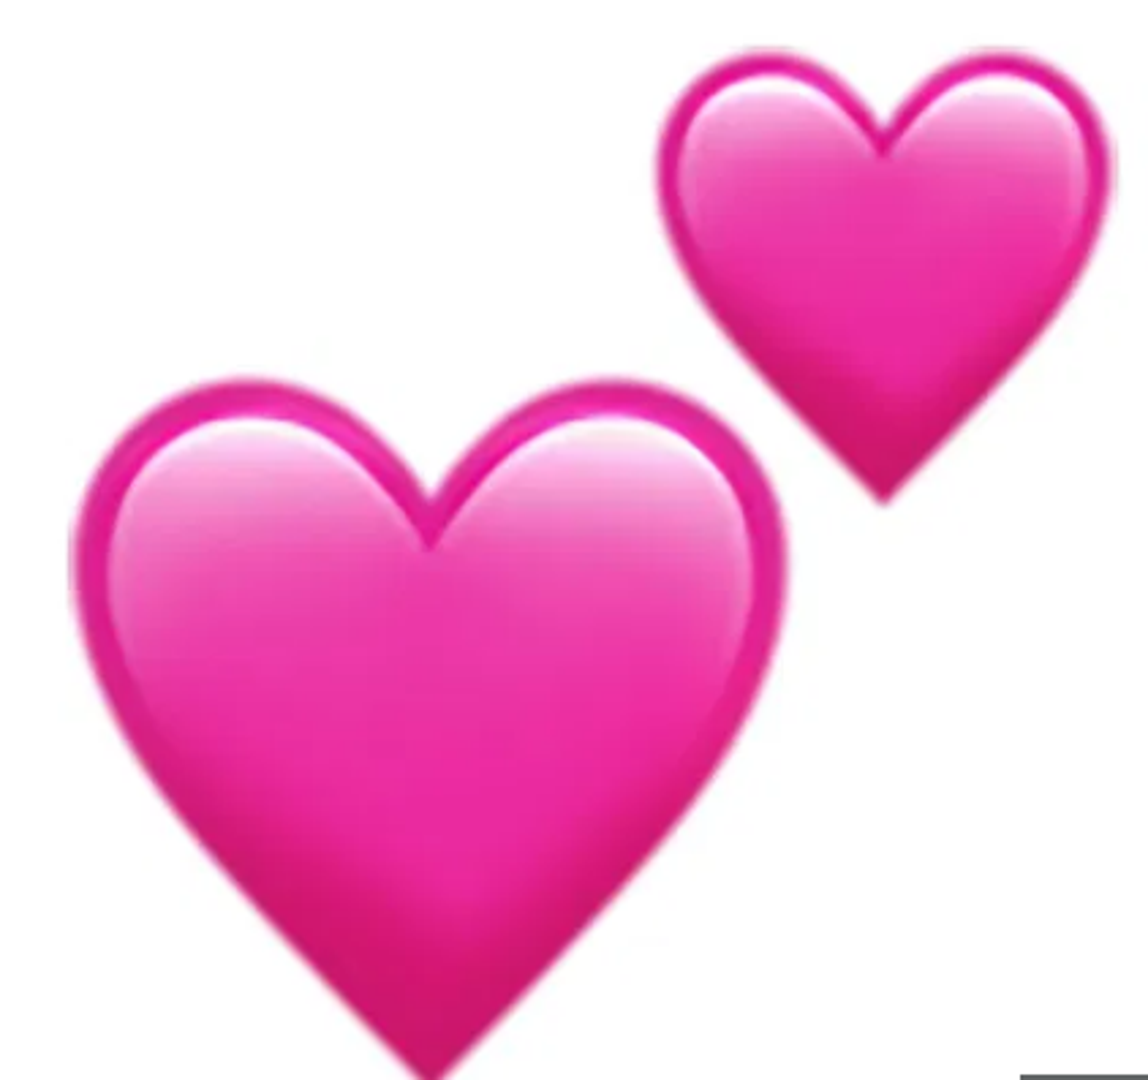 Dva ružičasta srca govore 'ljubav je u zraku' odnosno, obostranu zaljubljenost. 